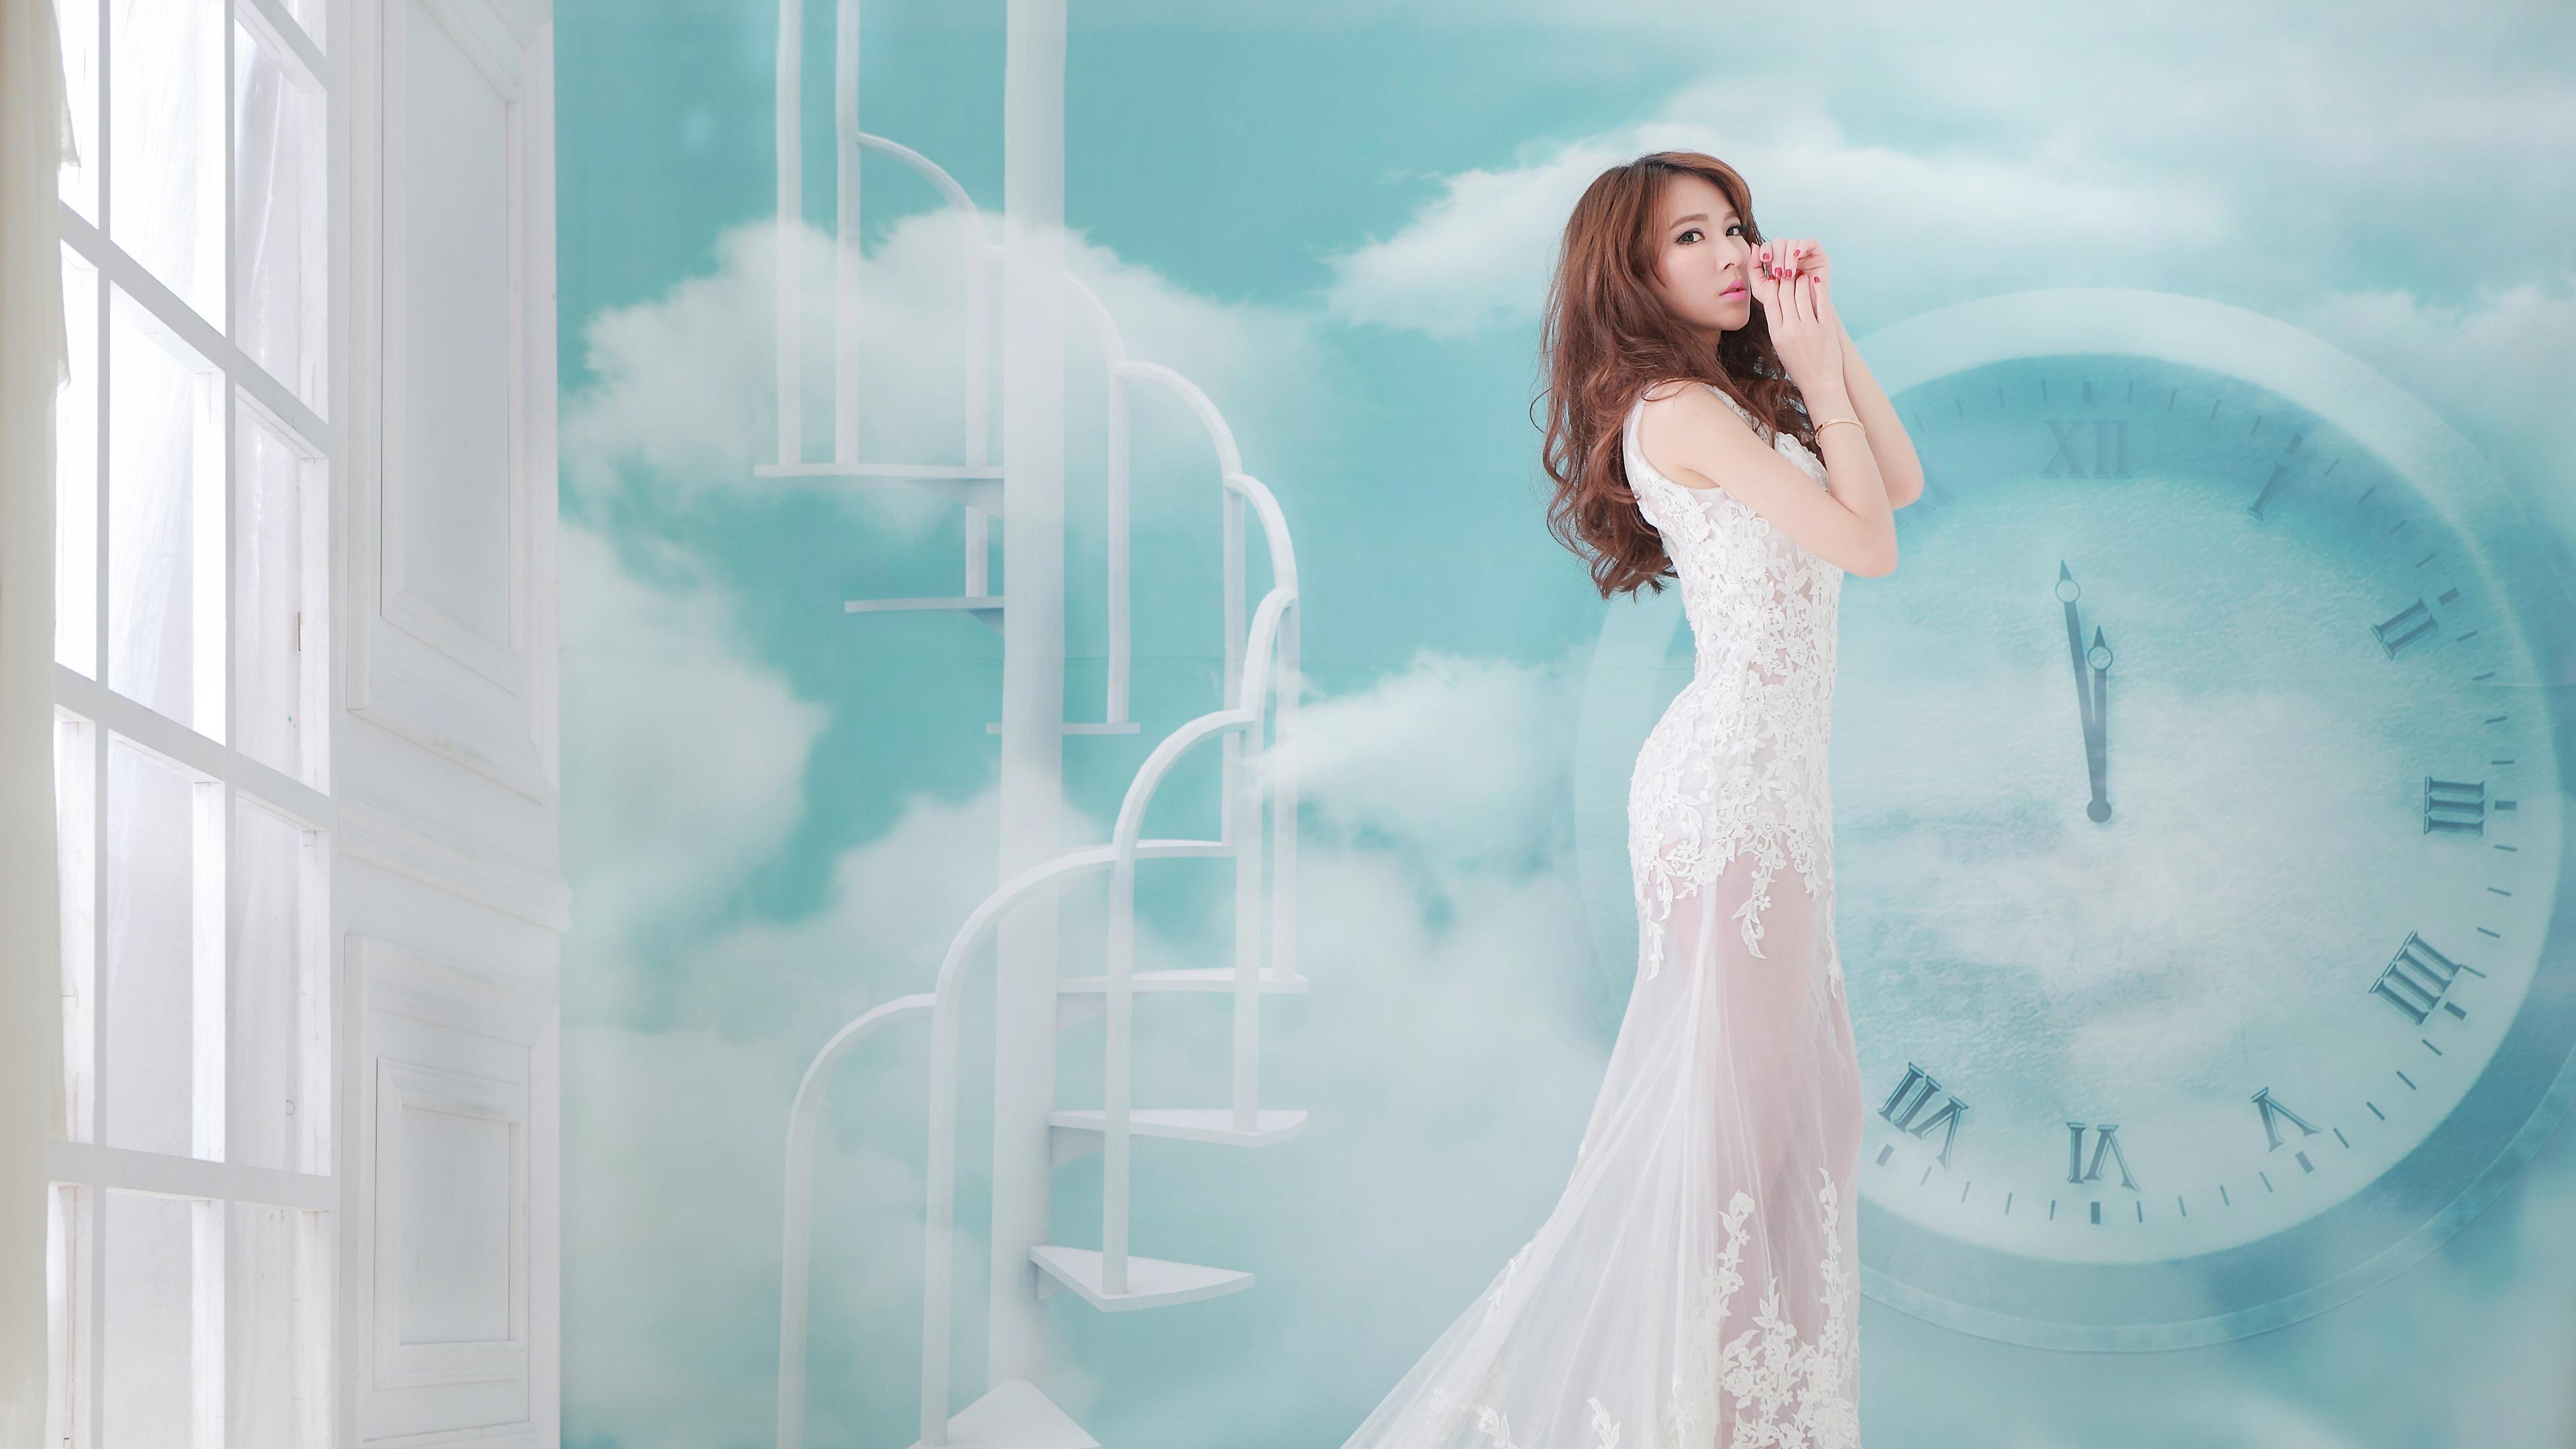 HD Patty Lai in a wedding dress Wallpaper